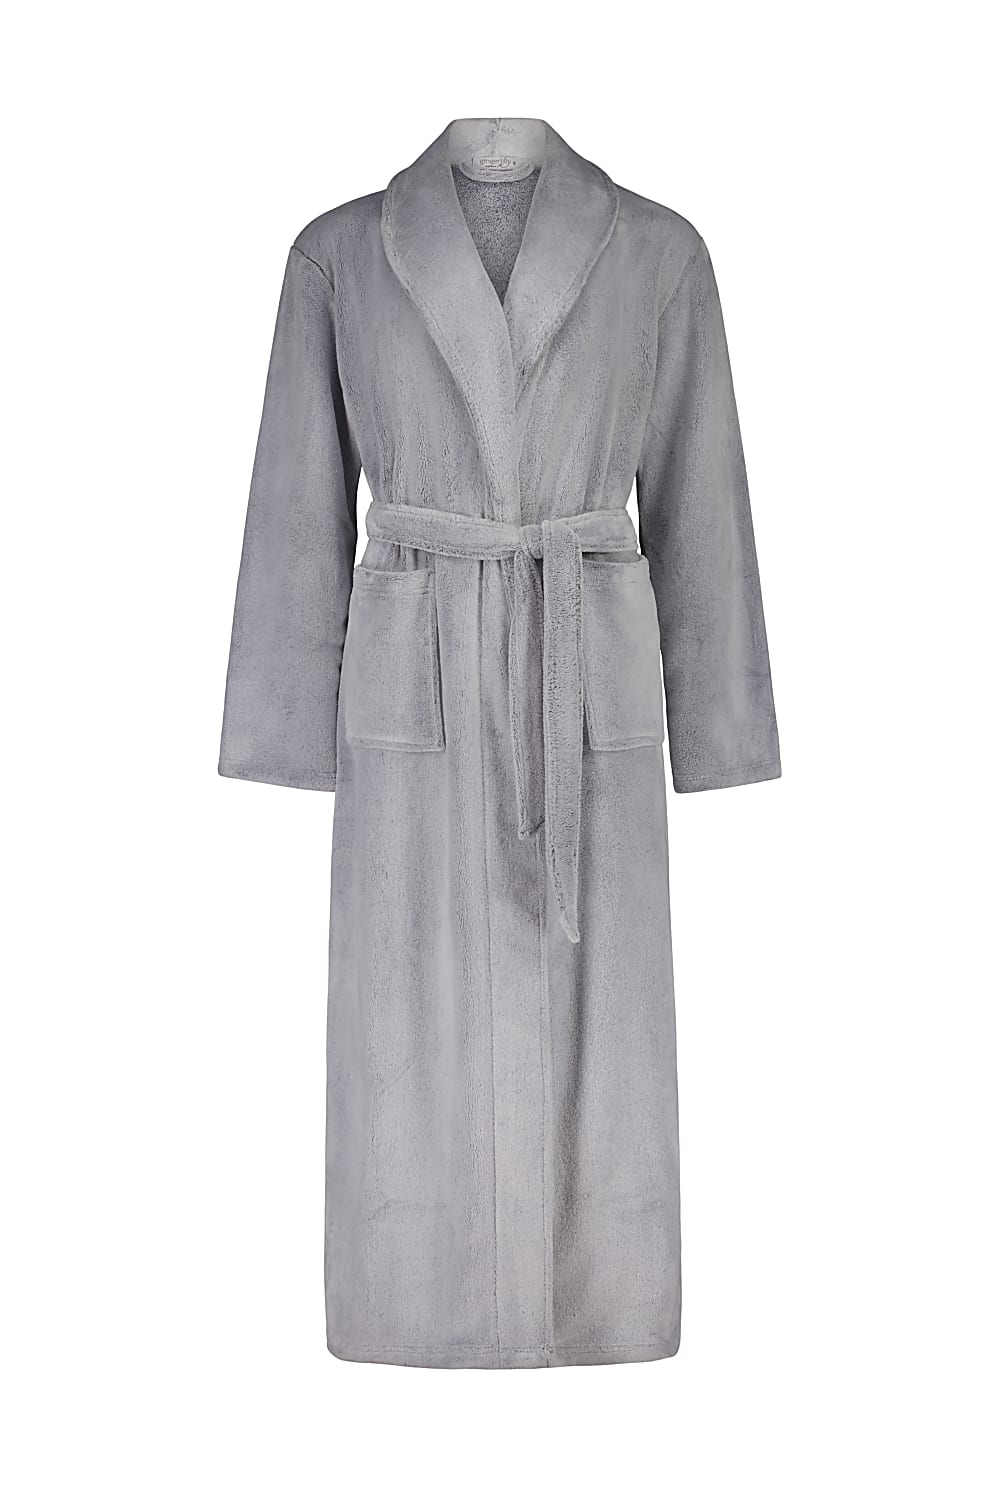 Desiré Grey Long Plush Robe